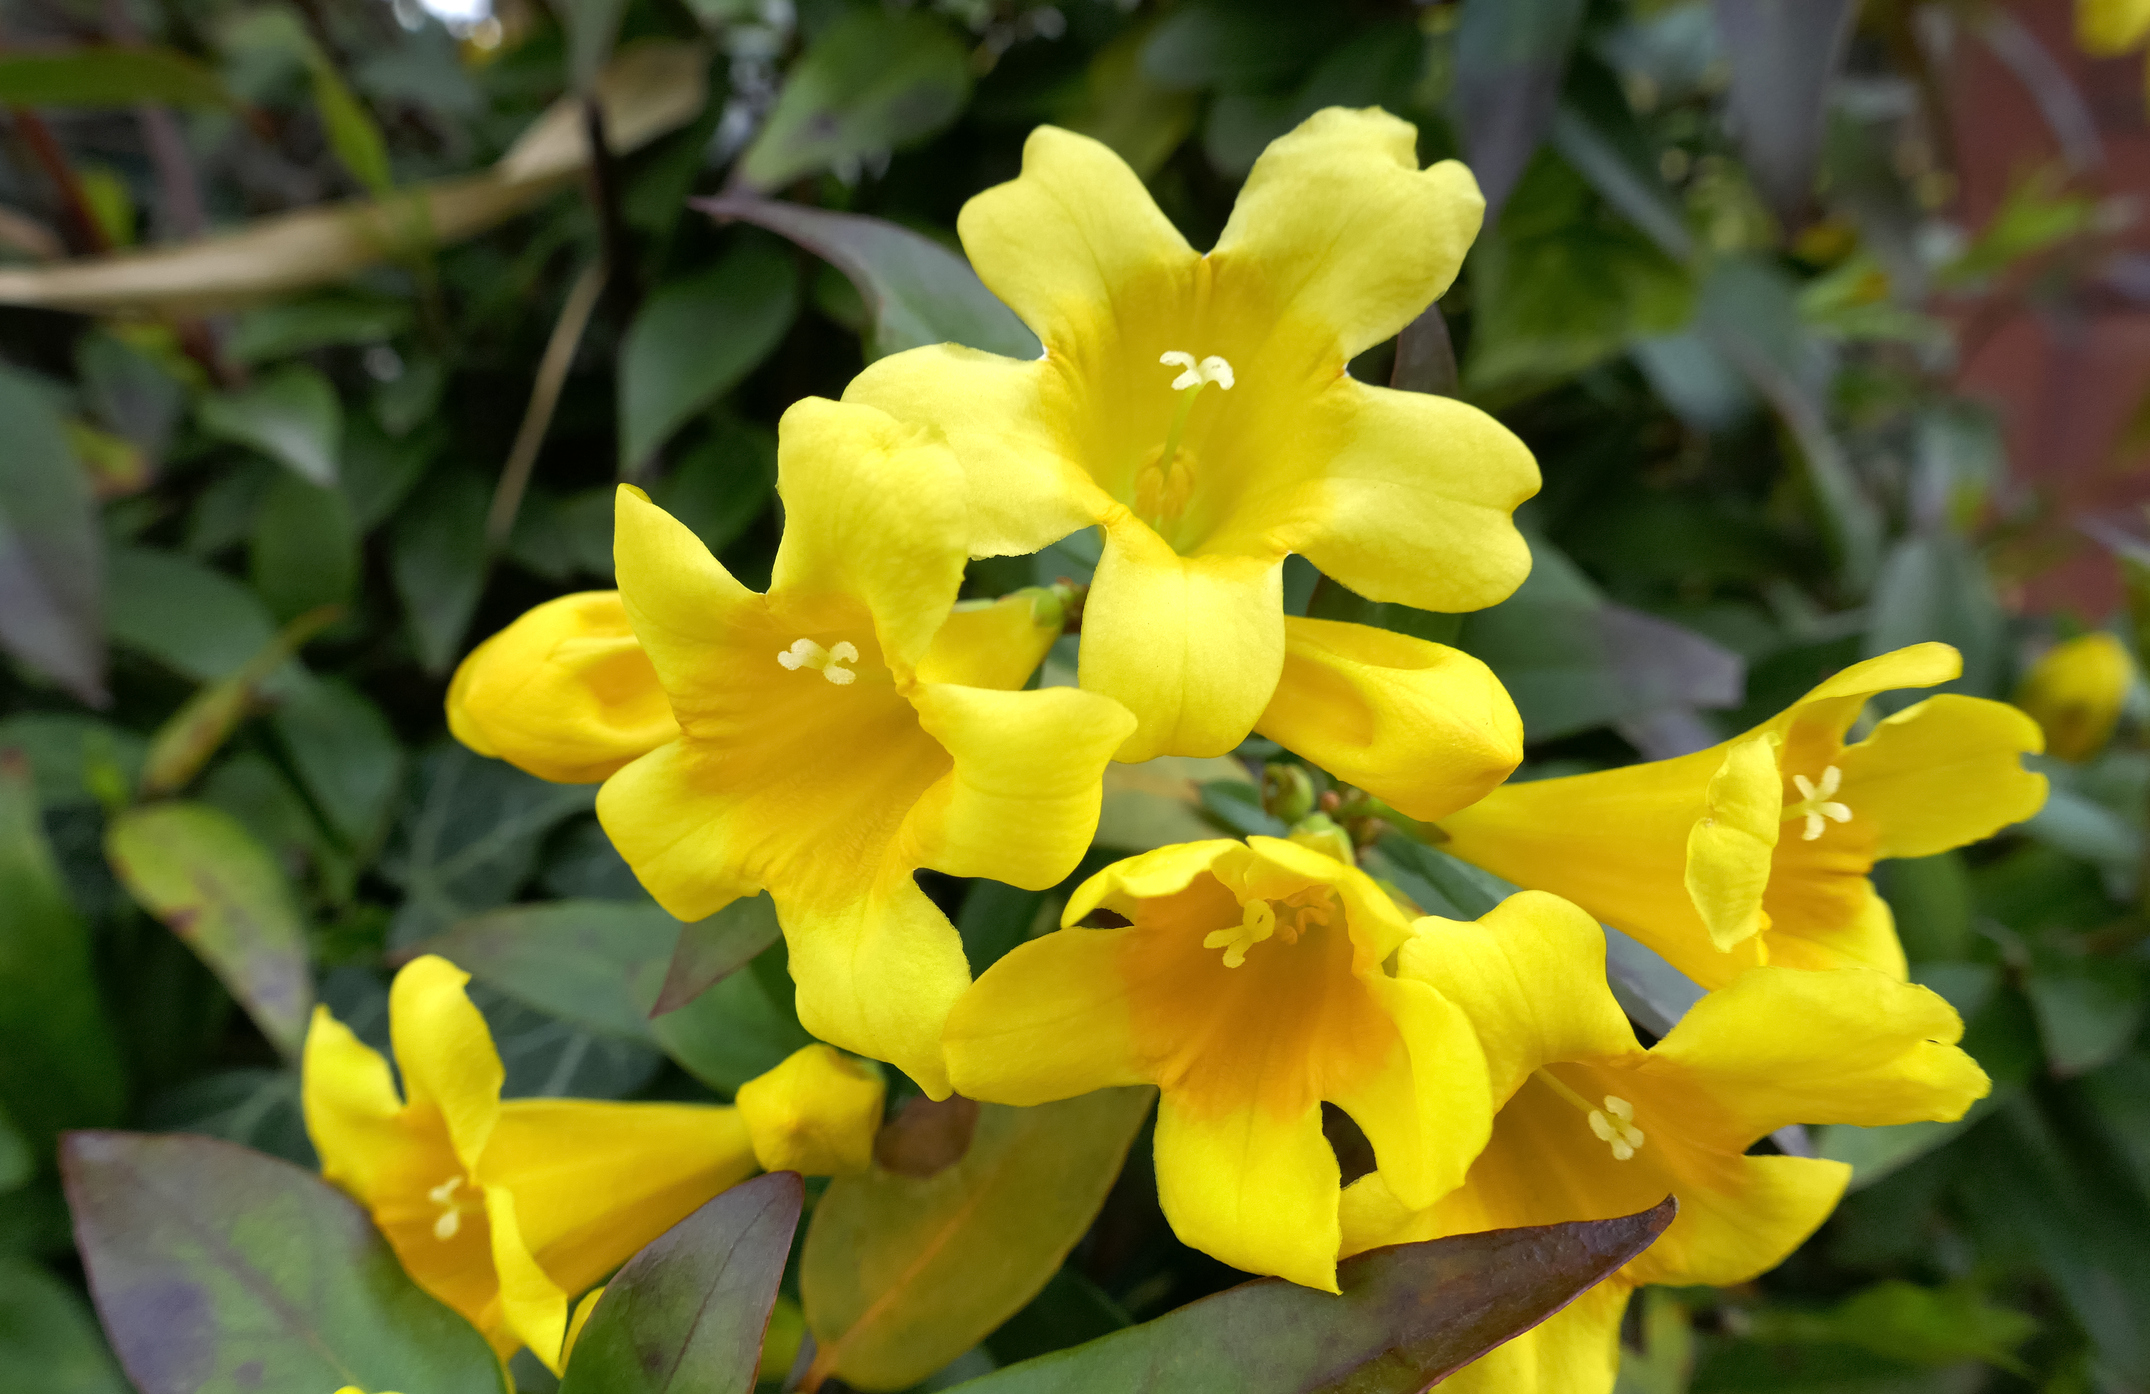 Yellow flowers blooming in the spring season. 「Yellow jasmine」、「Carolina jasmine」, Gelsemium sempervirens.